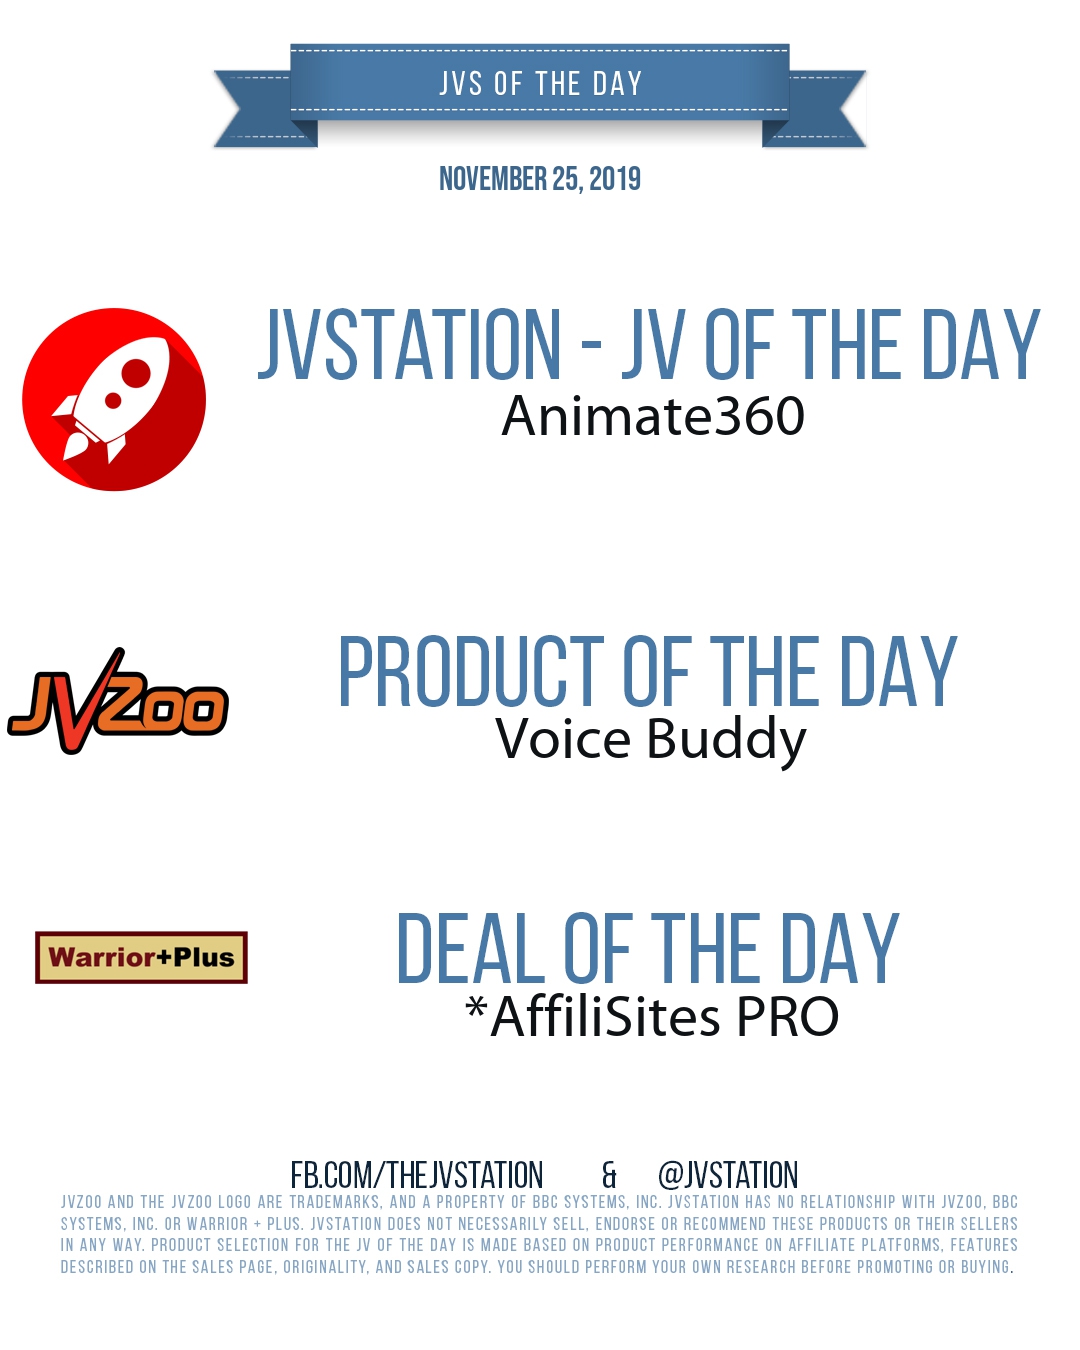 JVs of the day - November 25, 2019